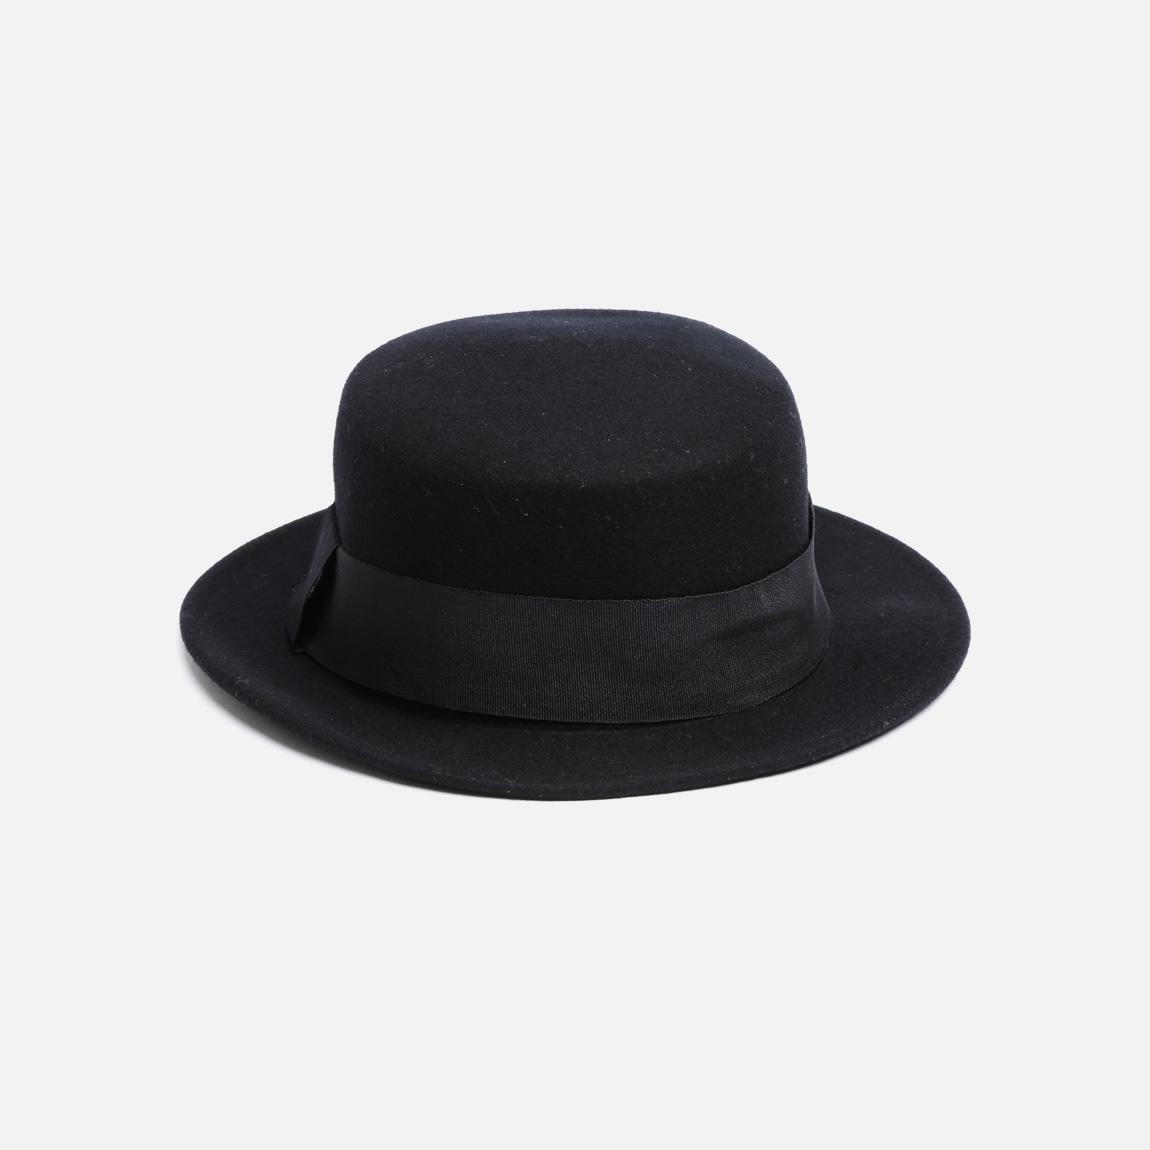 HEISENBERG HAT - BLACK The Lot Headwear | Superbalist.com